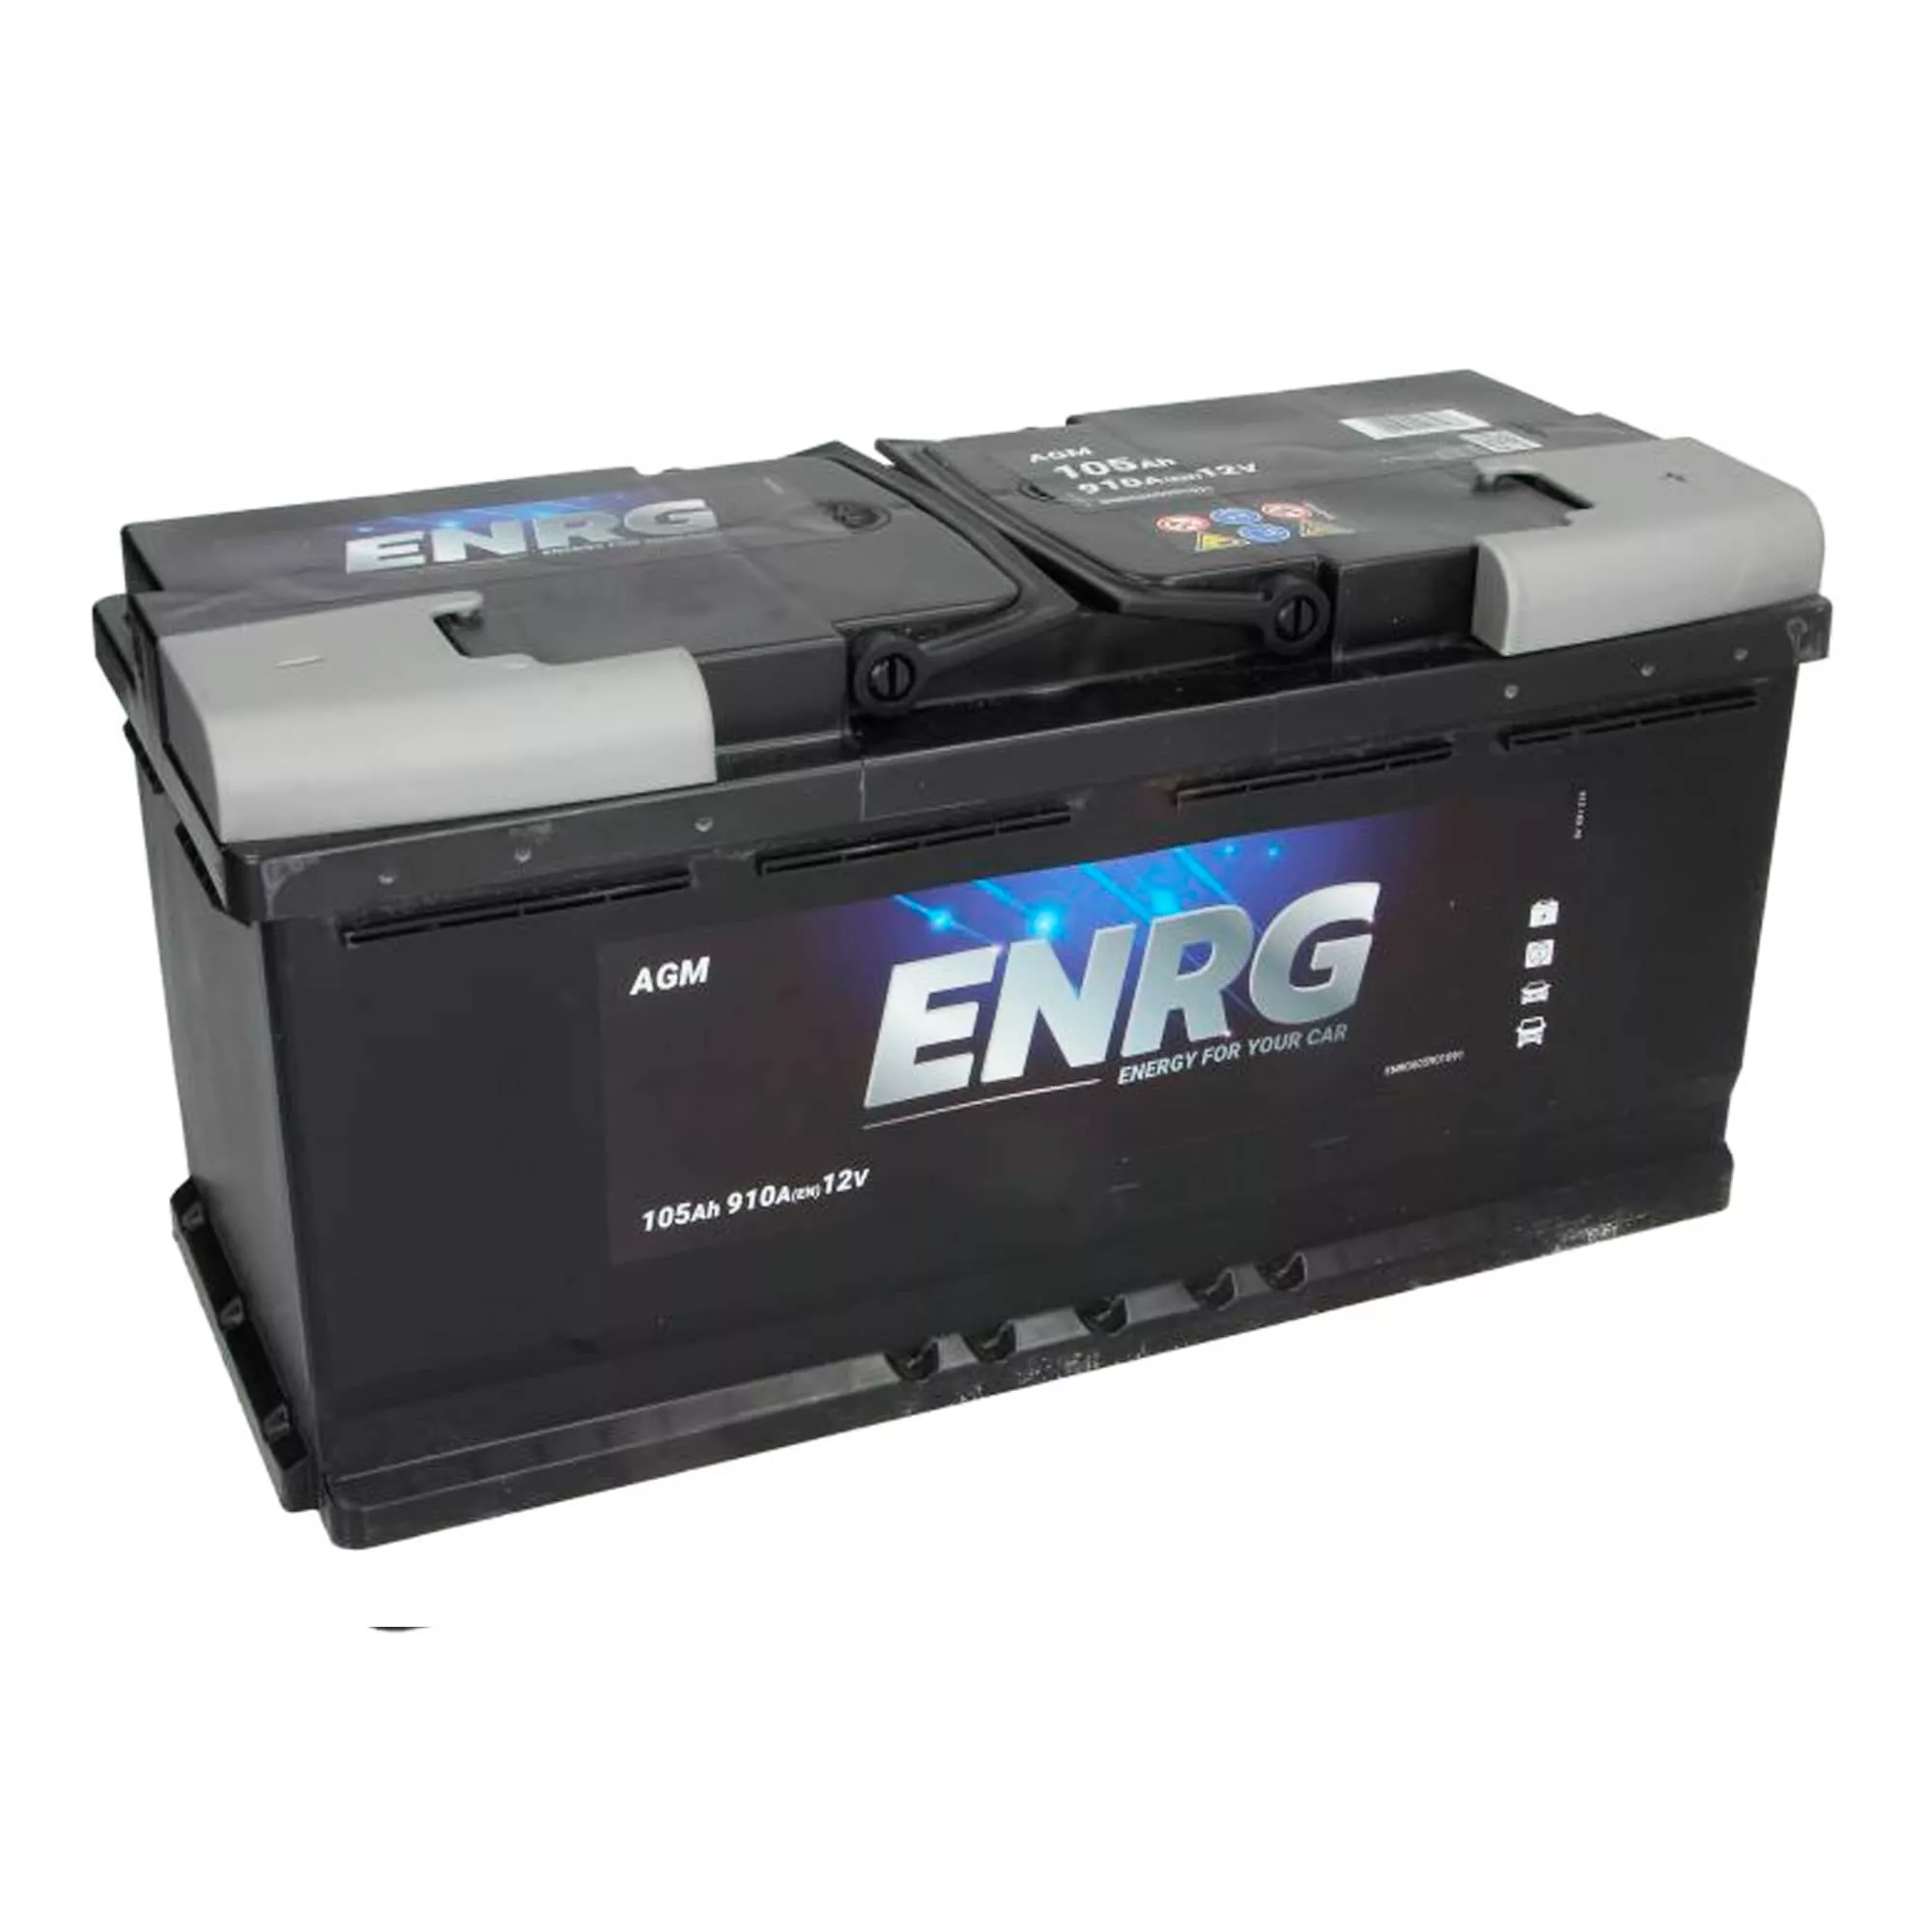 Автомобильный аккумулятор ENRG 12В 105AH АзЕ 910А AGM (ENRG605901091)